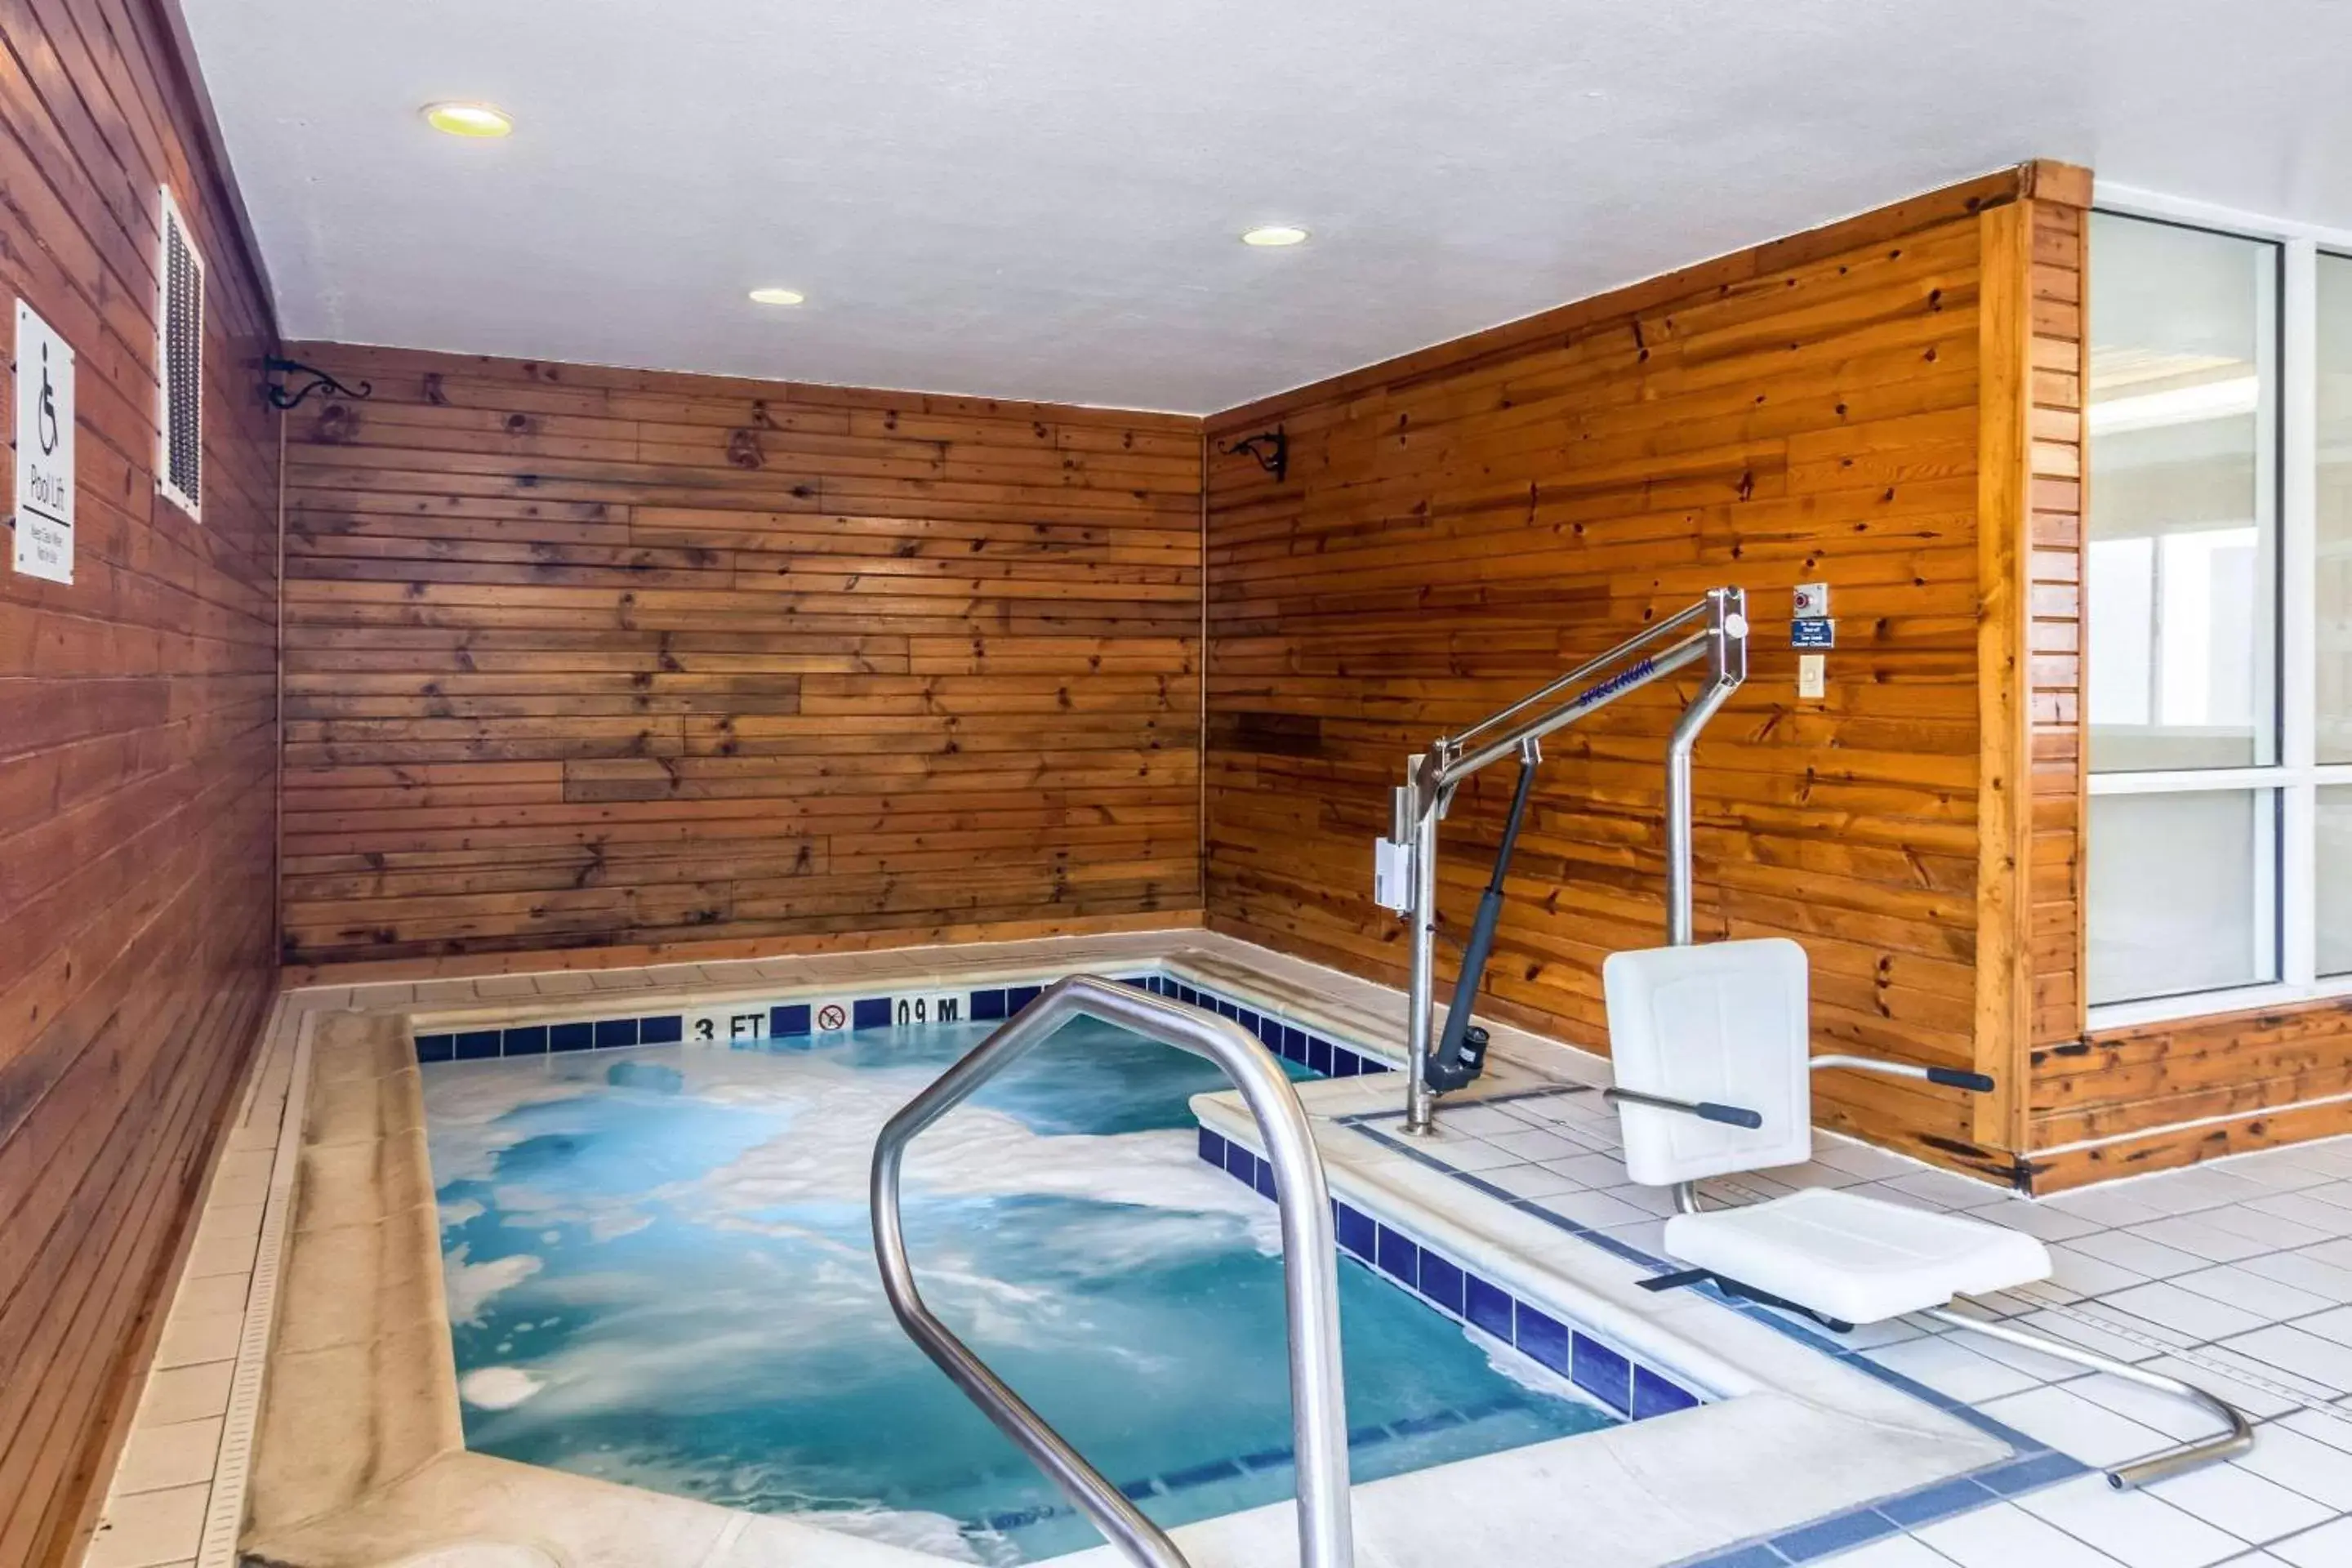 On site, Swimming Pool in Comfort Inn & Suites - Hannibal